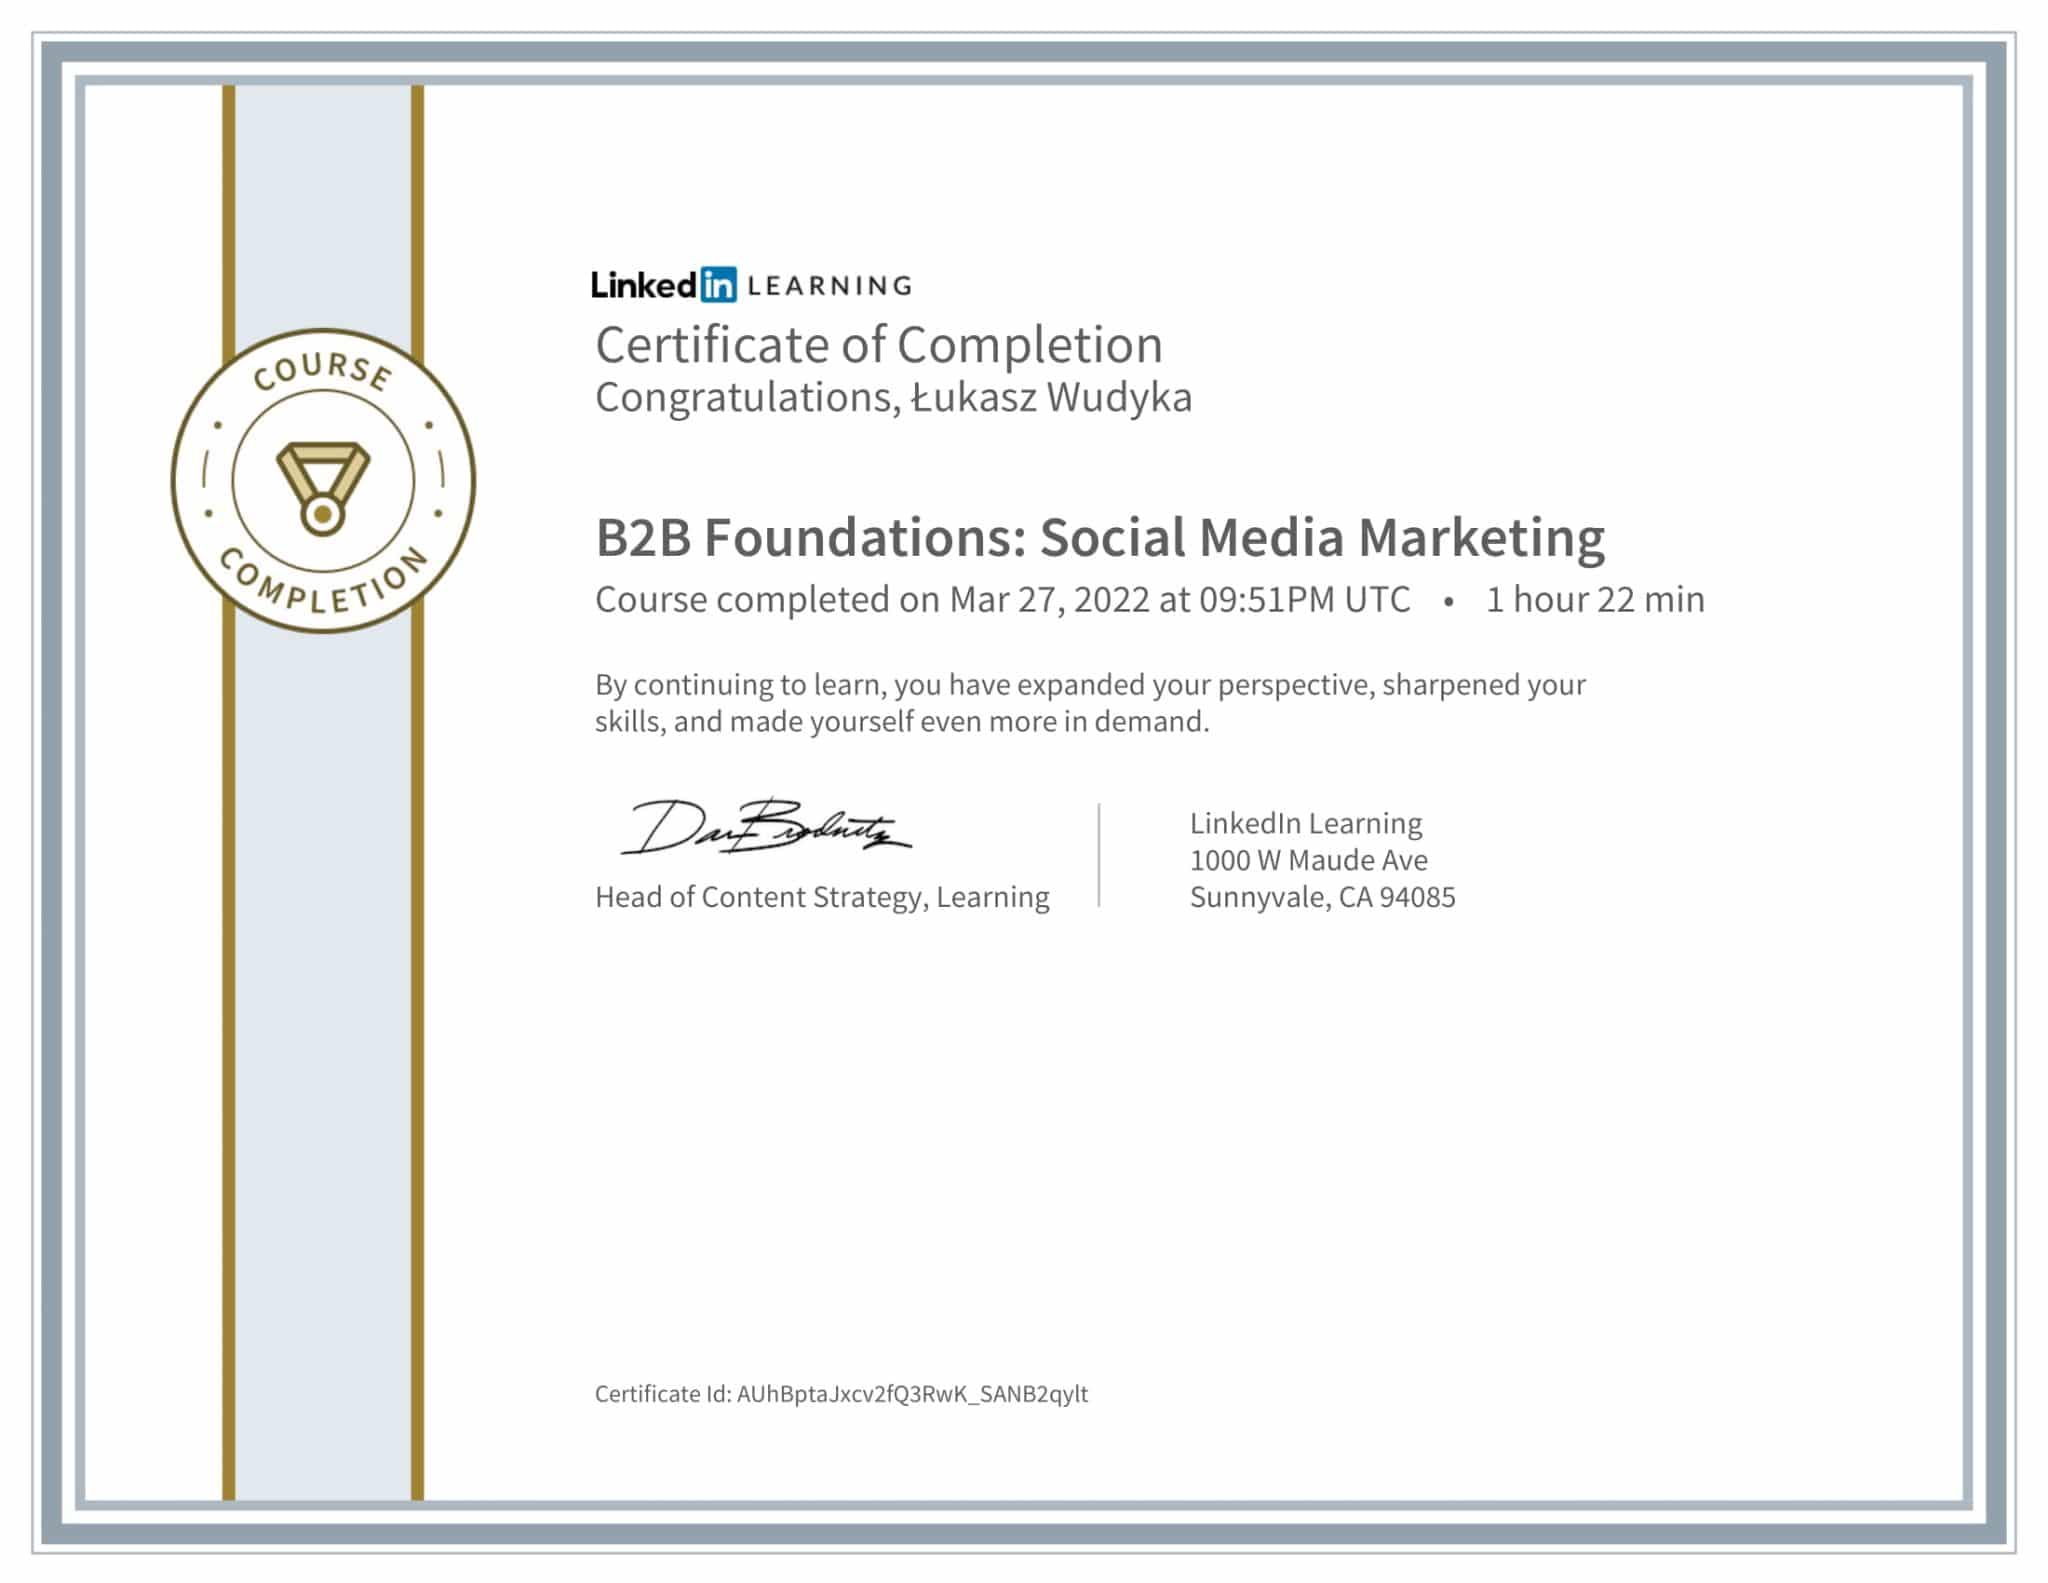 CertificateOfCompletion_B2B Foundations Social Media Marketing-1